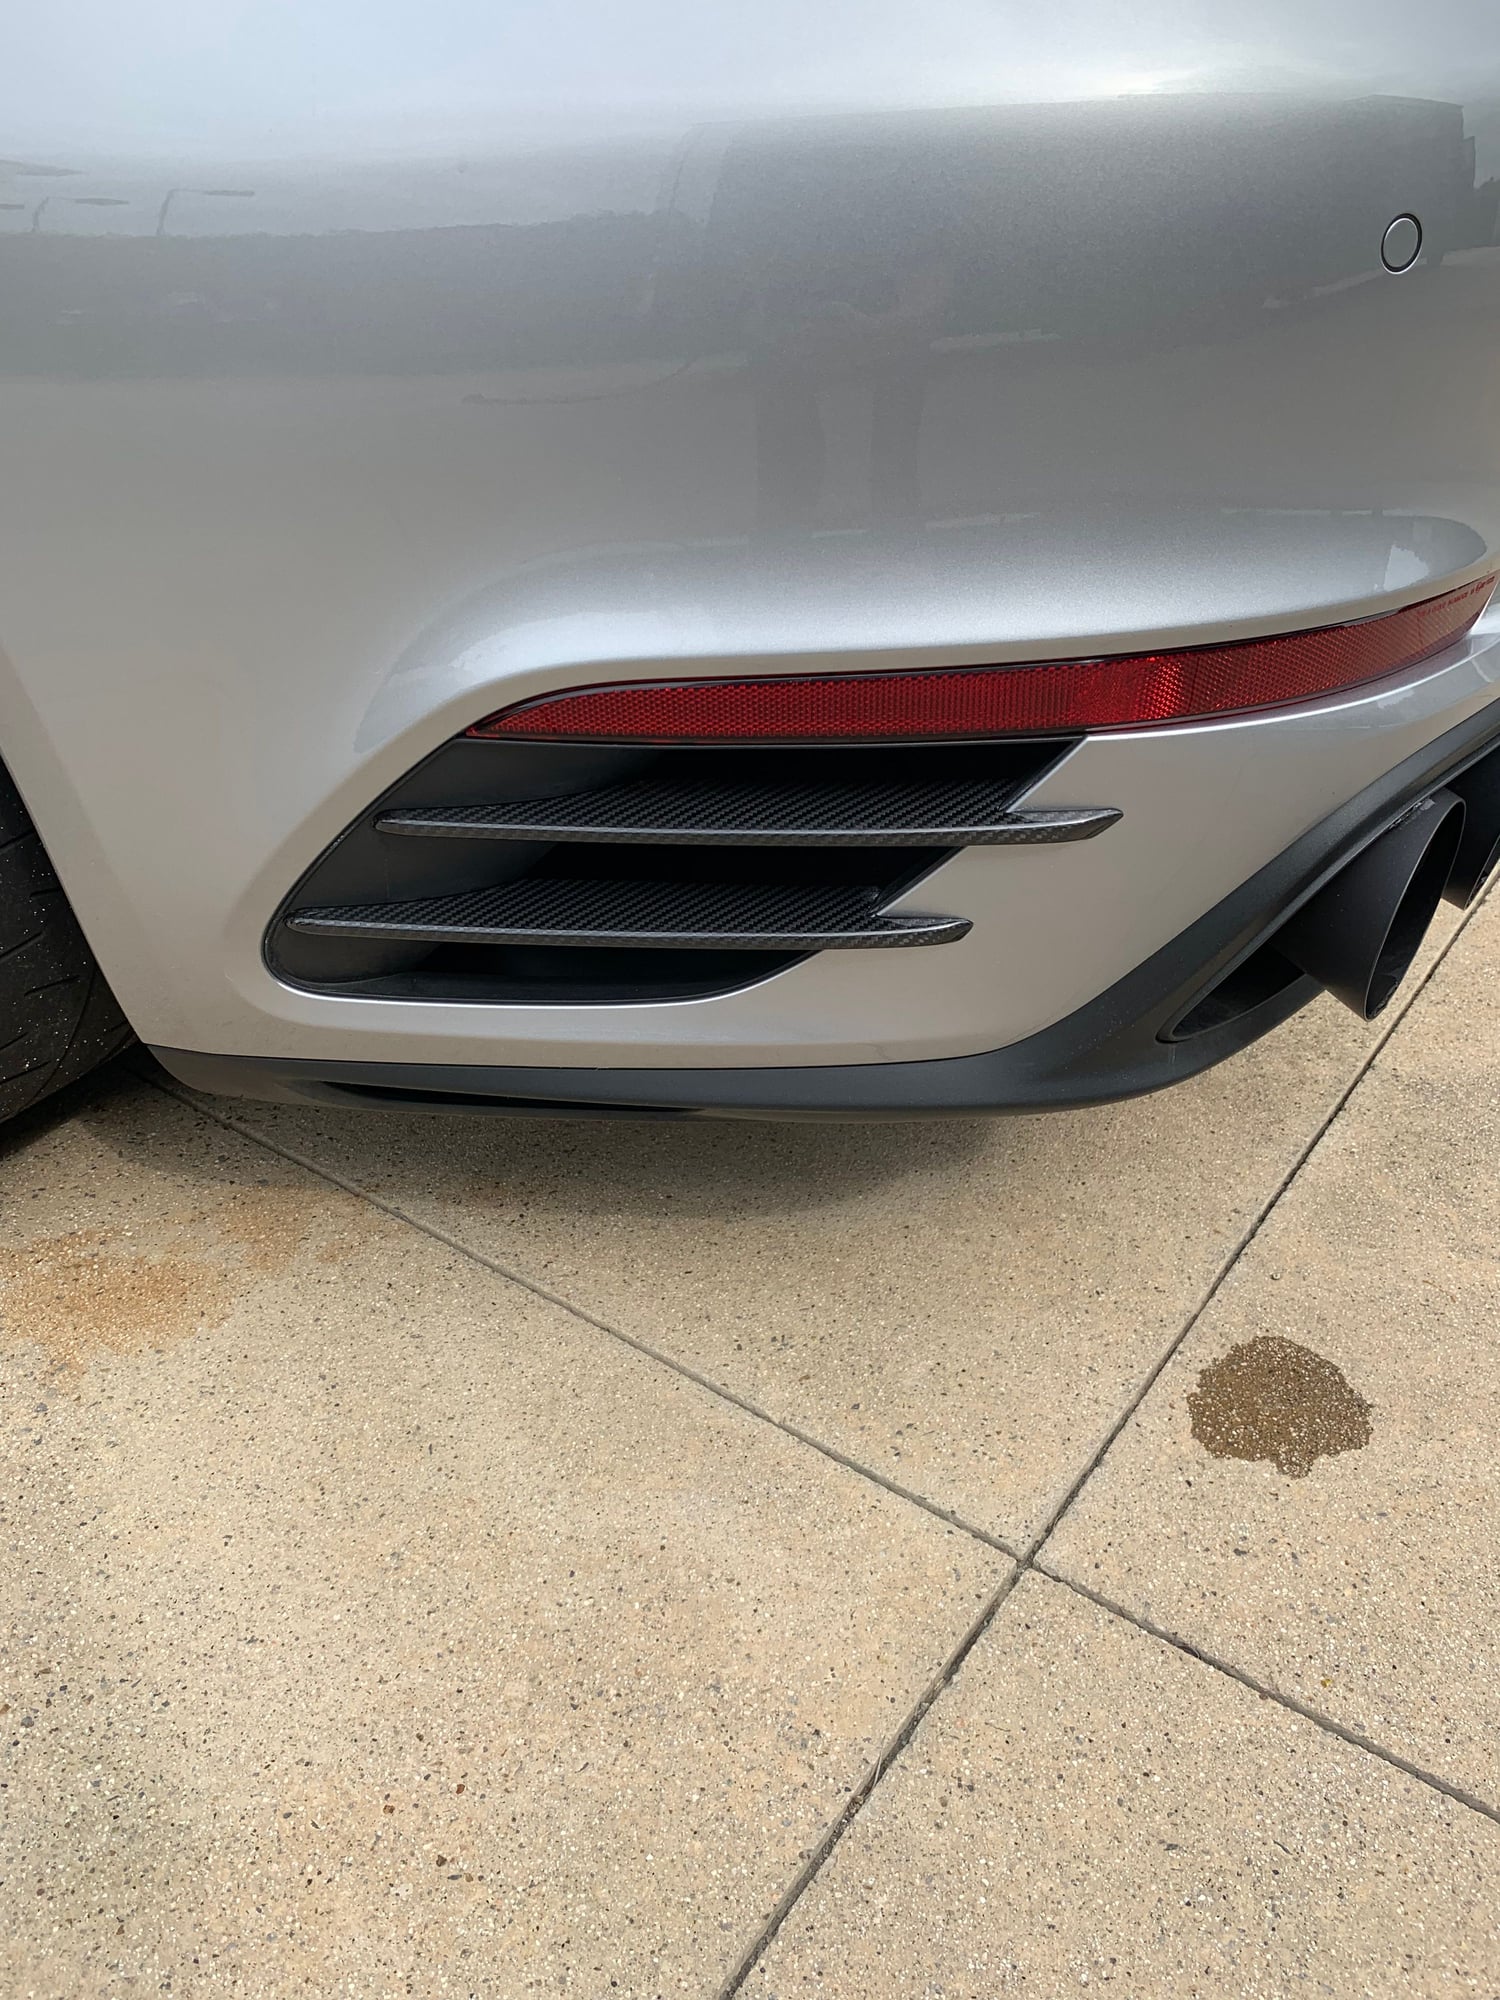 2018 Porsche 911 - 2018 Porsche 911 Turbo S - Used - VIN wp0ad2a91js156376 - 2,786 Miles - Coupe - Silver - Anaheim, CA 92807, United States